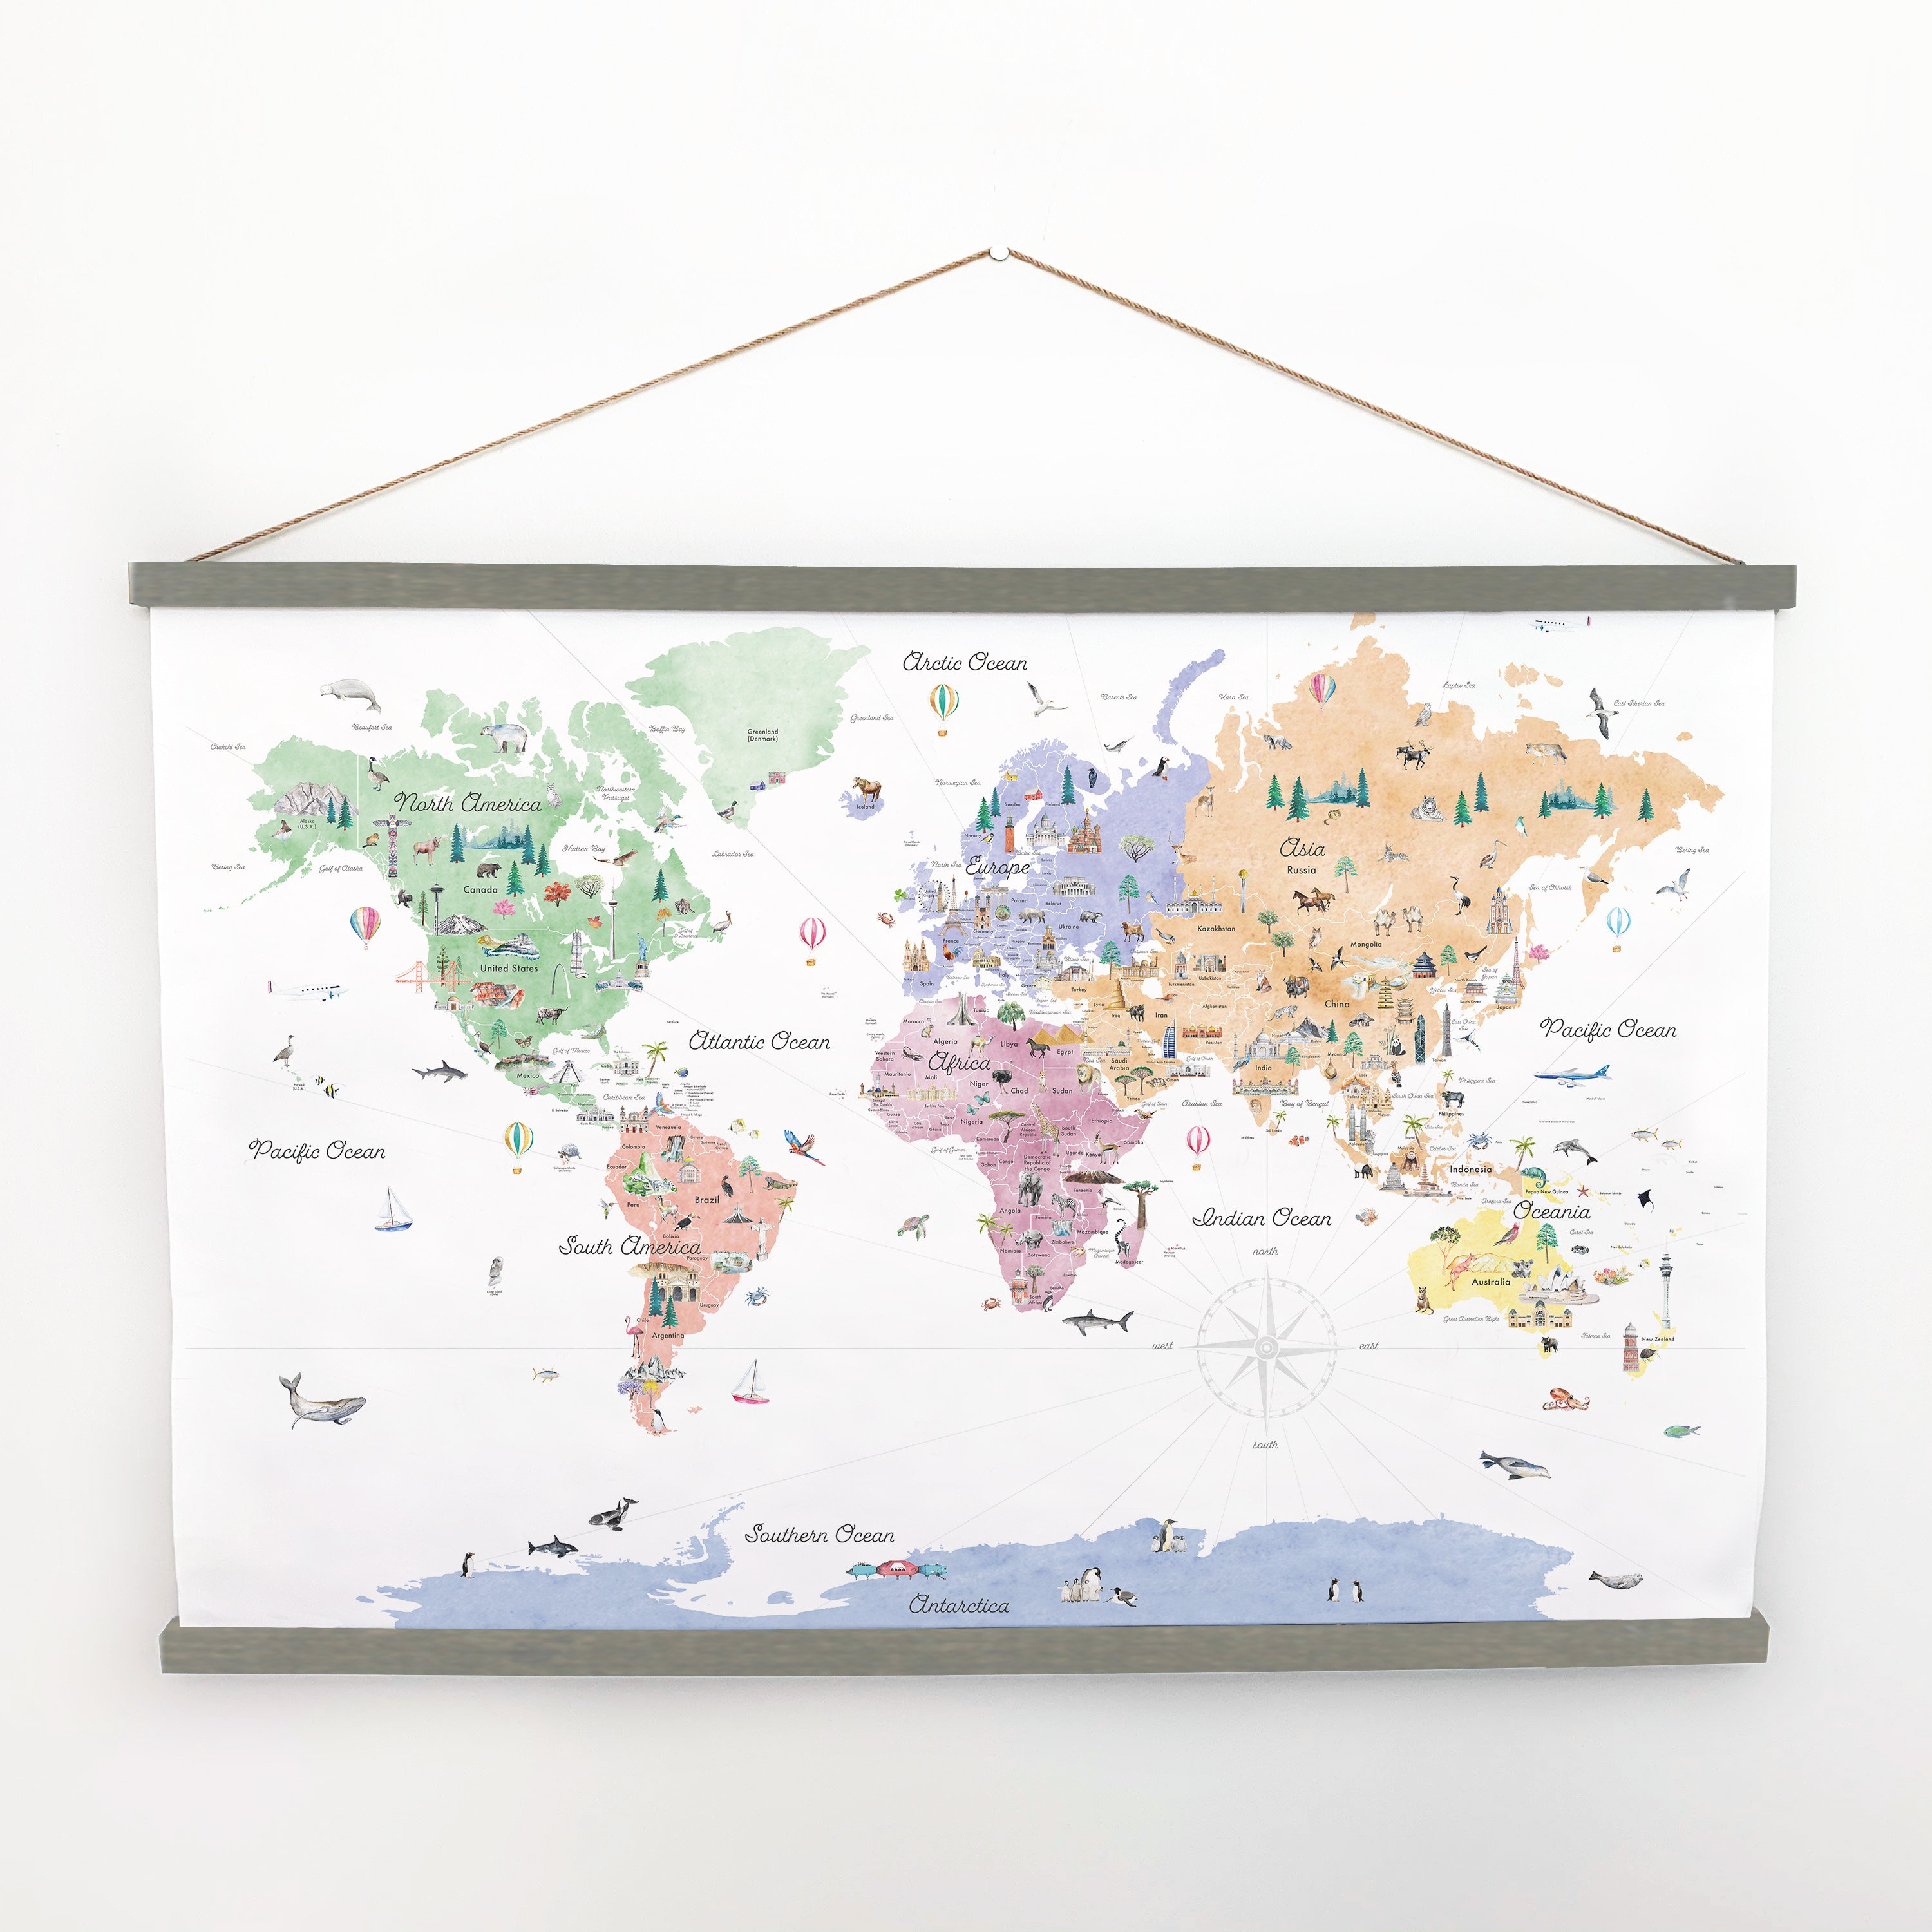 Newspaper Landmark World Map Art: Canvas Prints, Frames & Posters